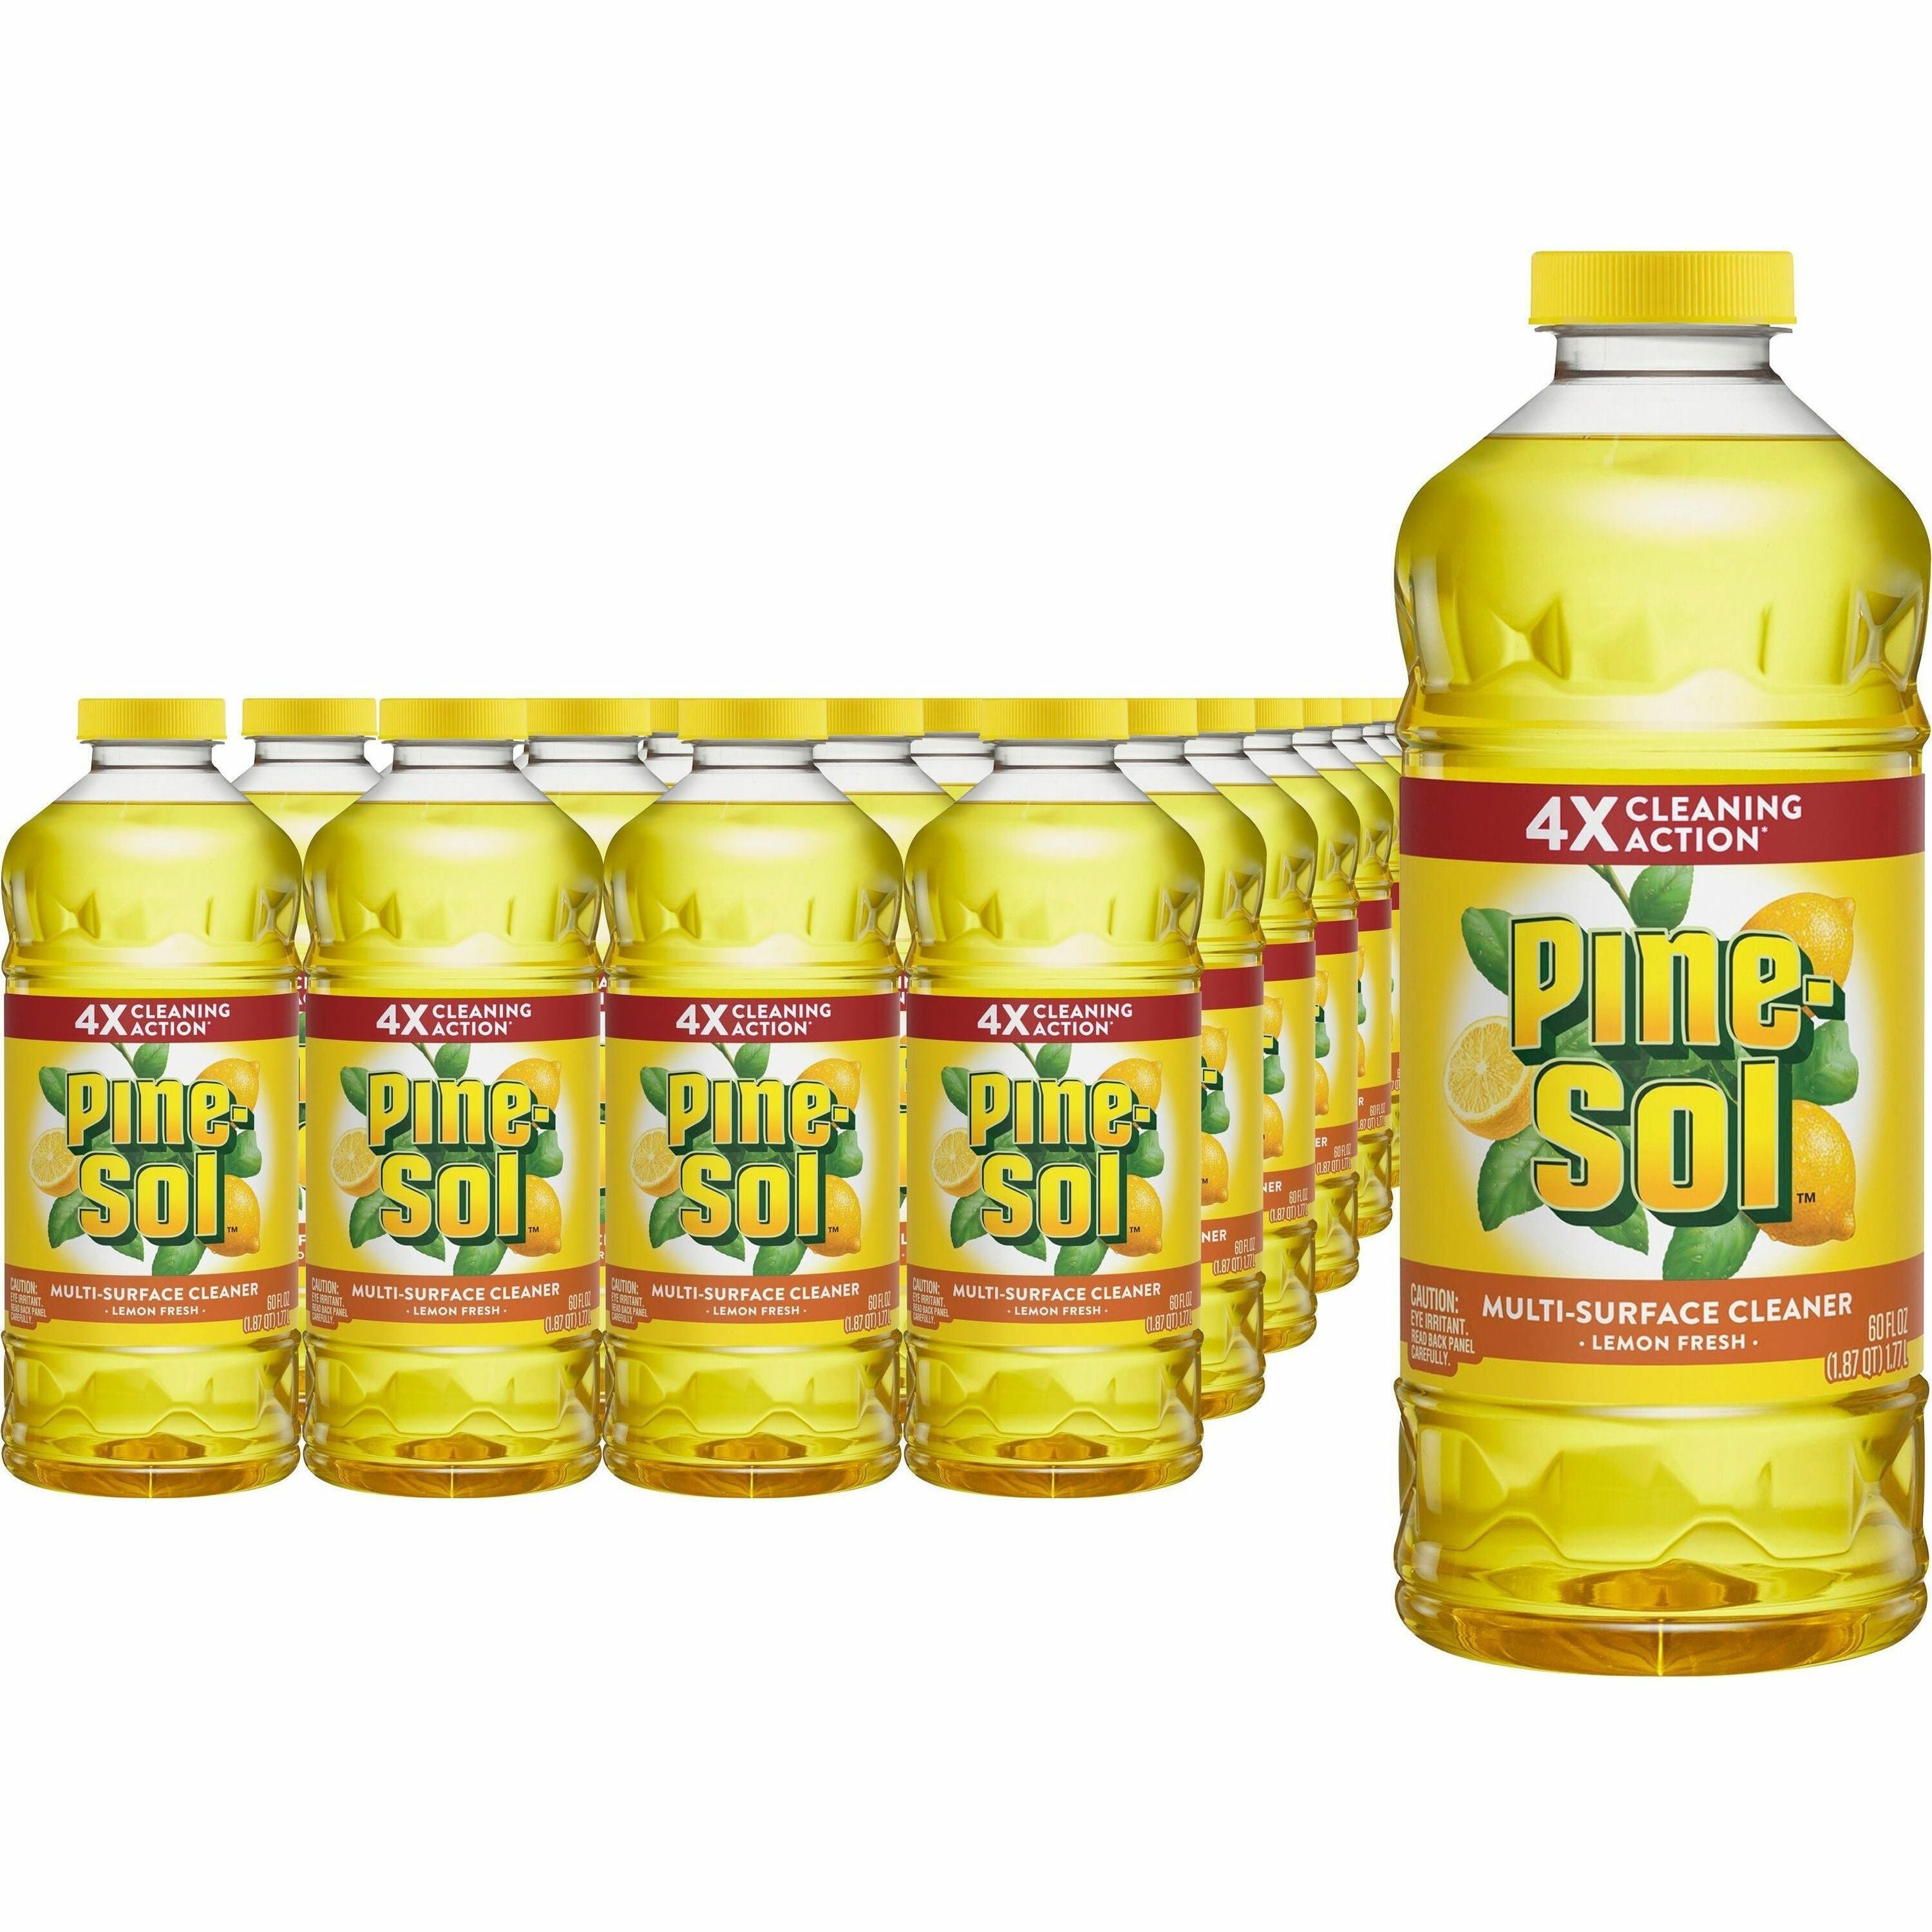 Pine-Sol All Purpose Multi-Surface Cleaner - Concentrate - 60 fl oz (1.9 quart) - Lemon Fresh Scent - 192 / Bundle - Deodorize - Yellow - 1